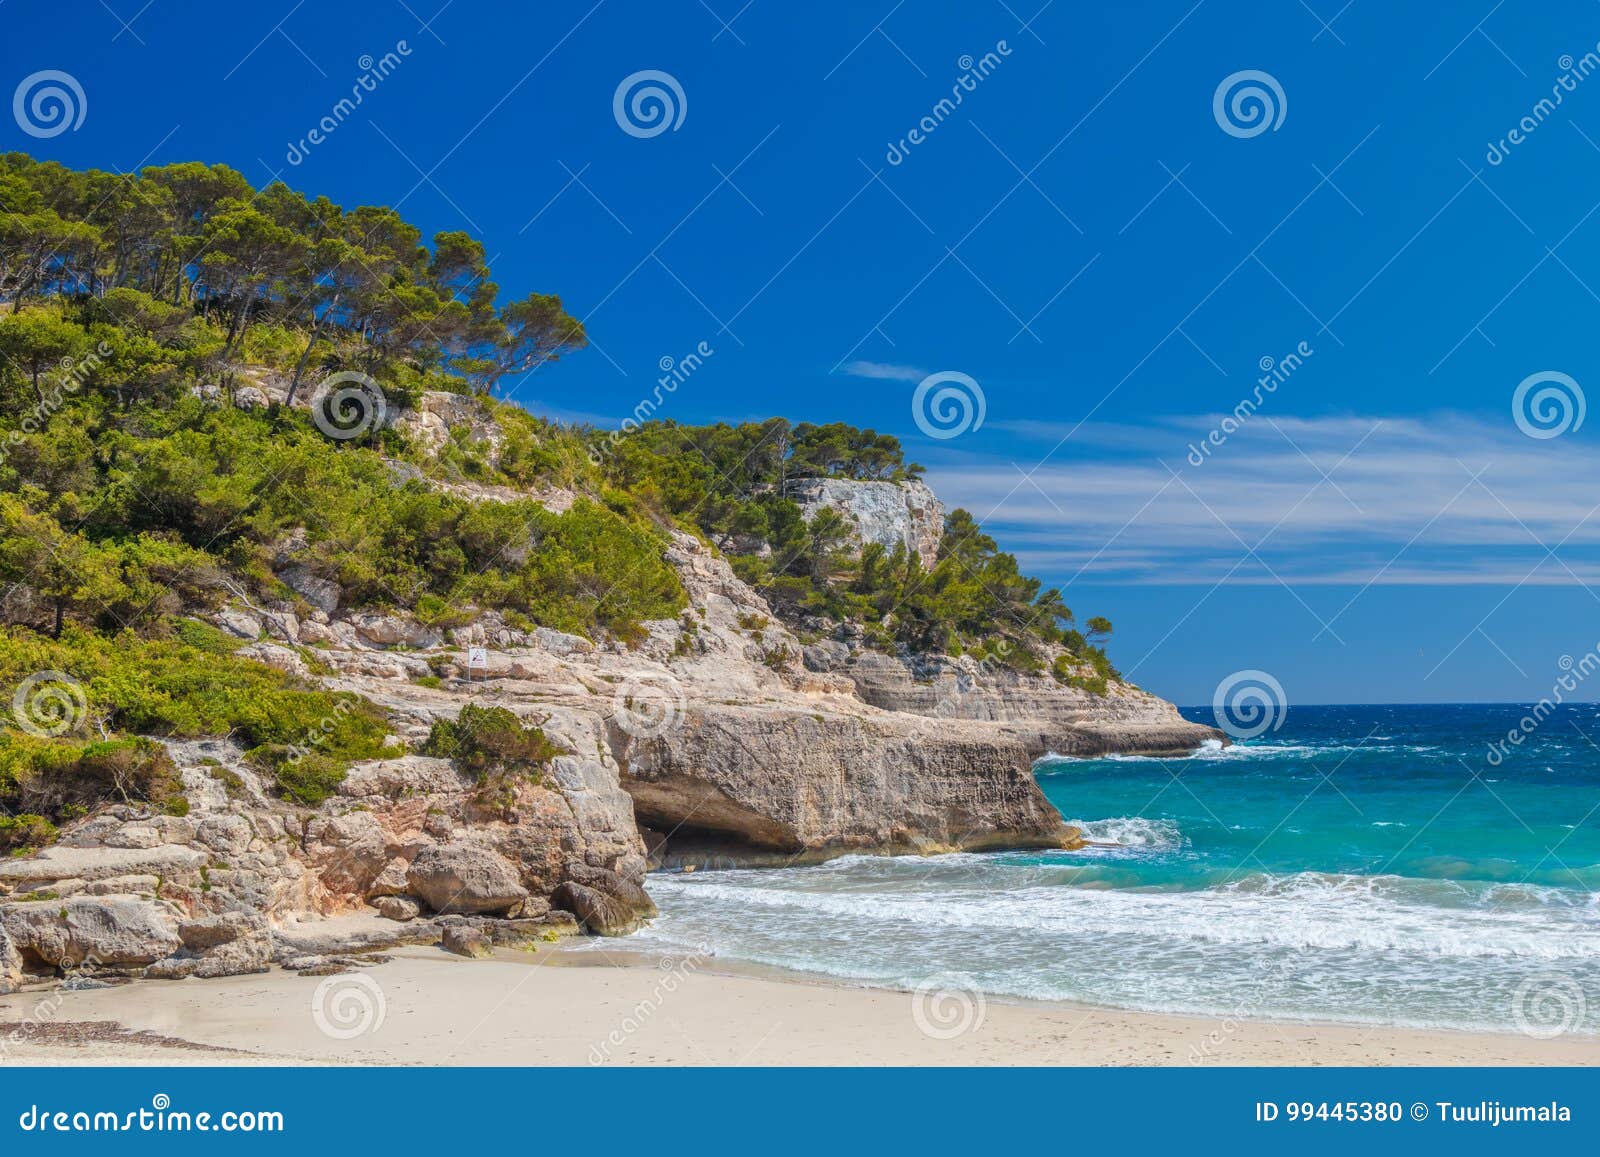 cala mitjana beach cliffs scenery